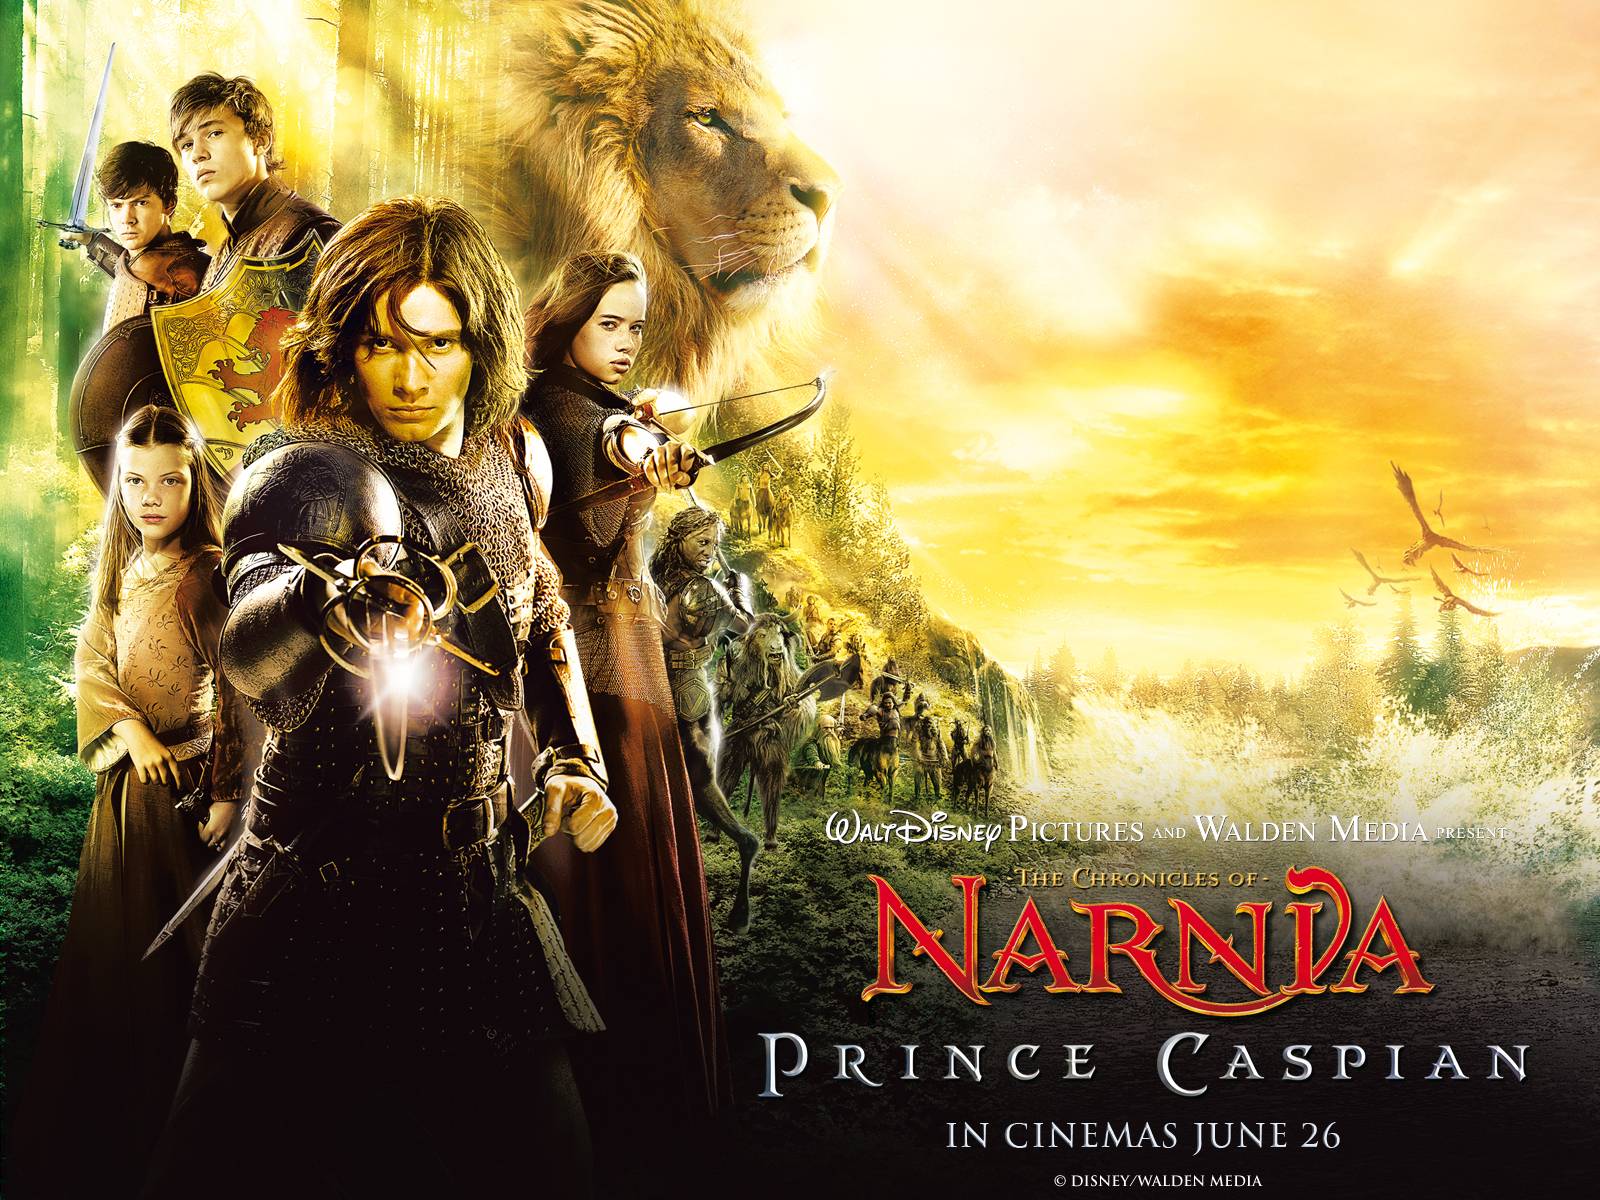 Chronicles of Narnia: Prince Caspian Potter vs. Narnia